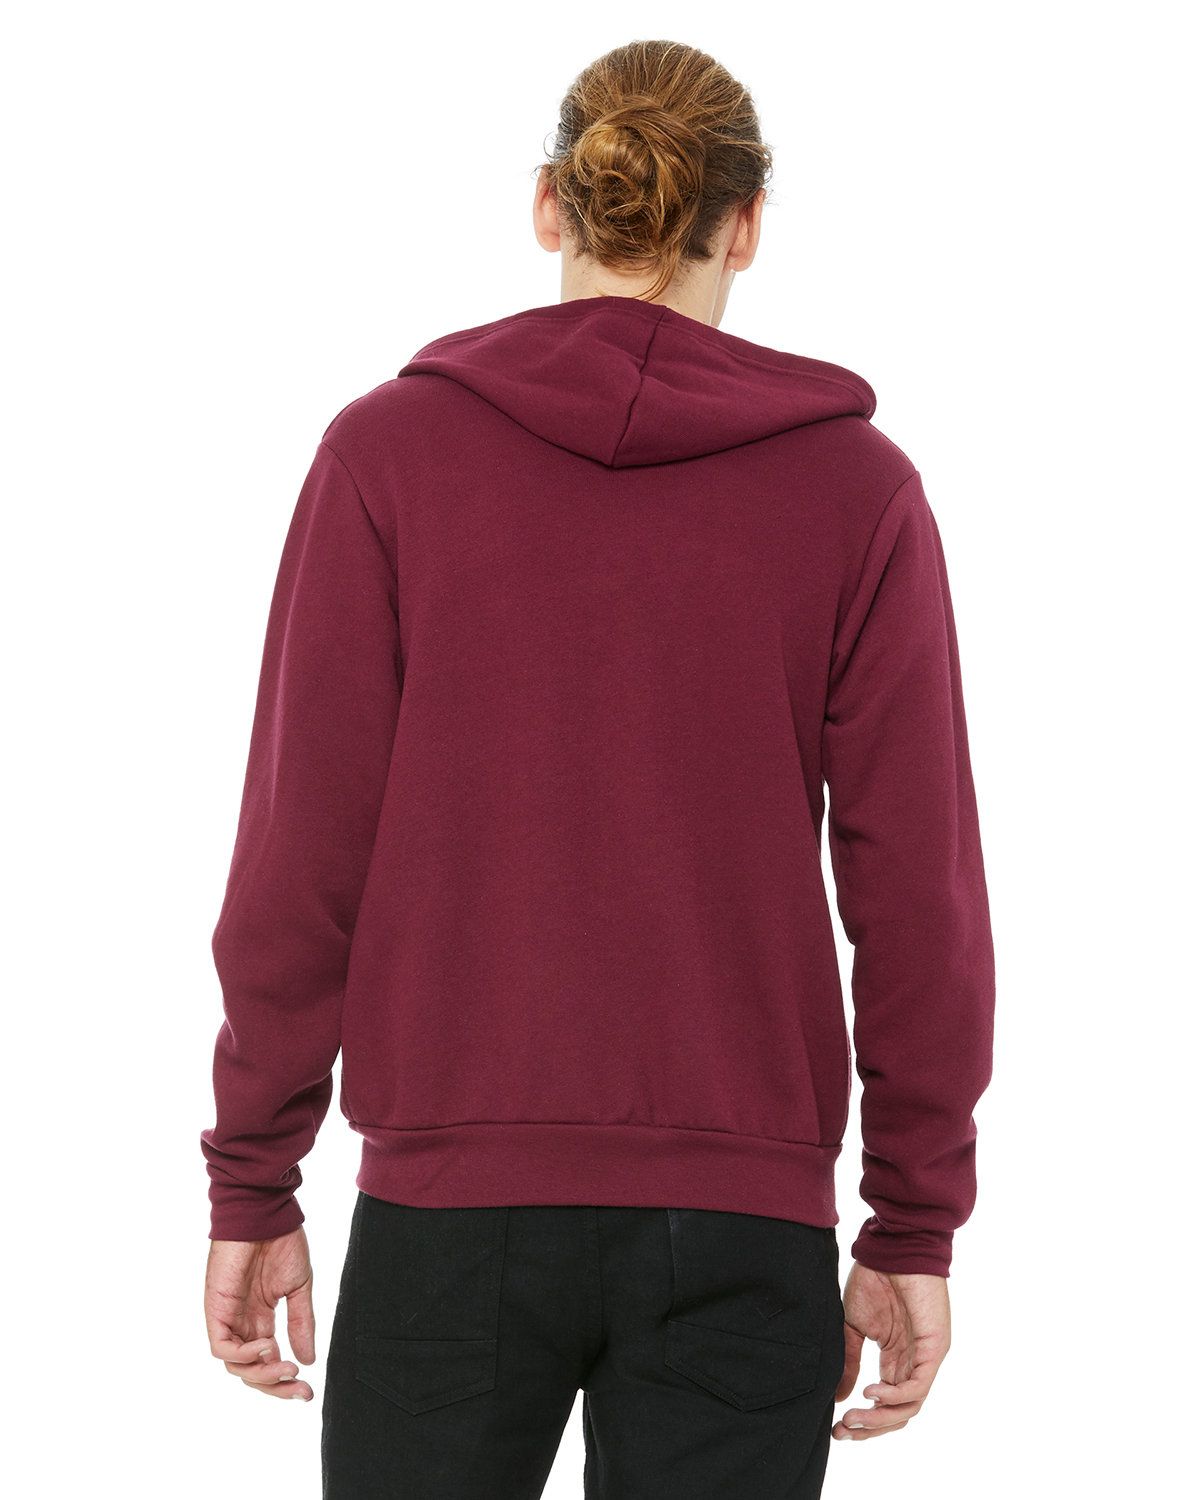 'Bella Canvas 3739 Unisex Poly Cotton Fleece Full Zip Hooded Sweatshirt'